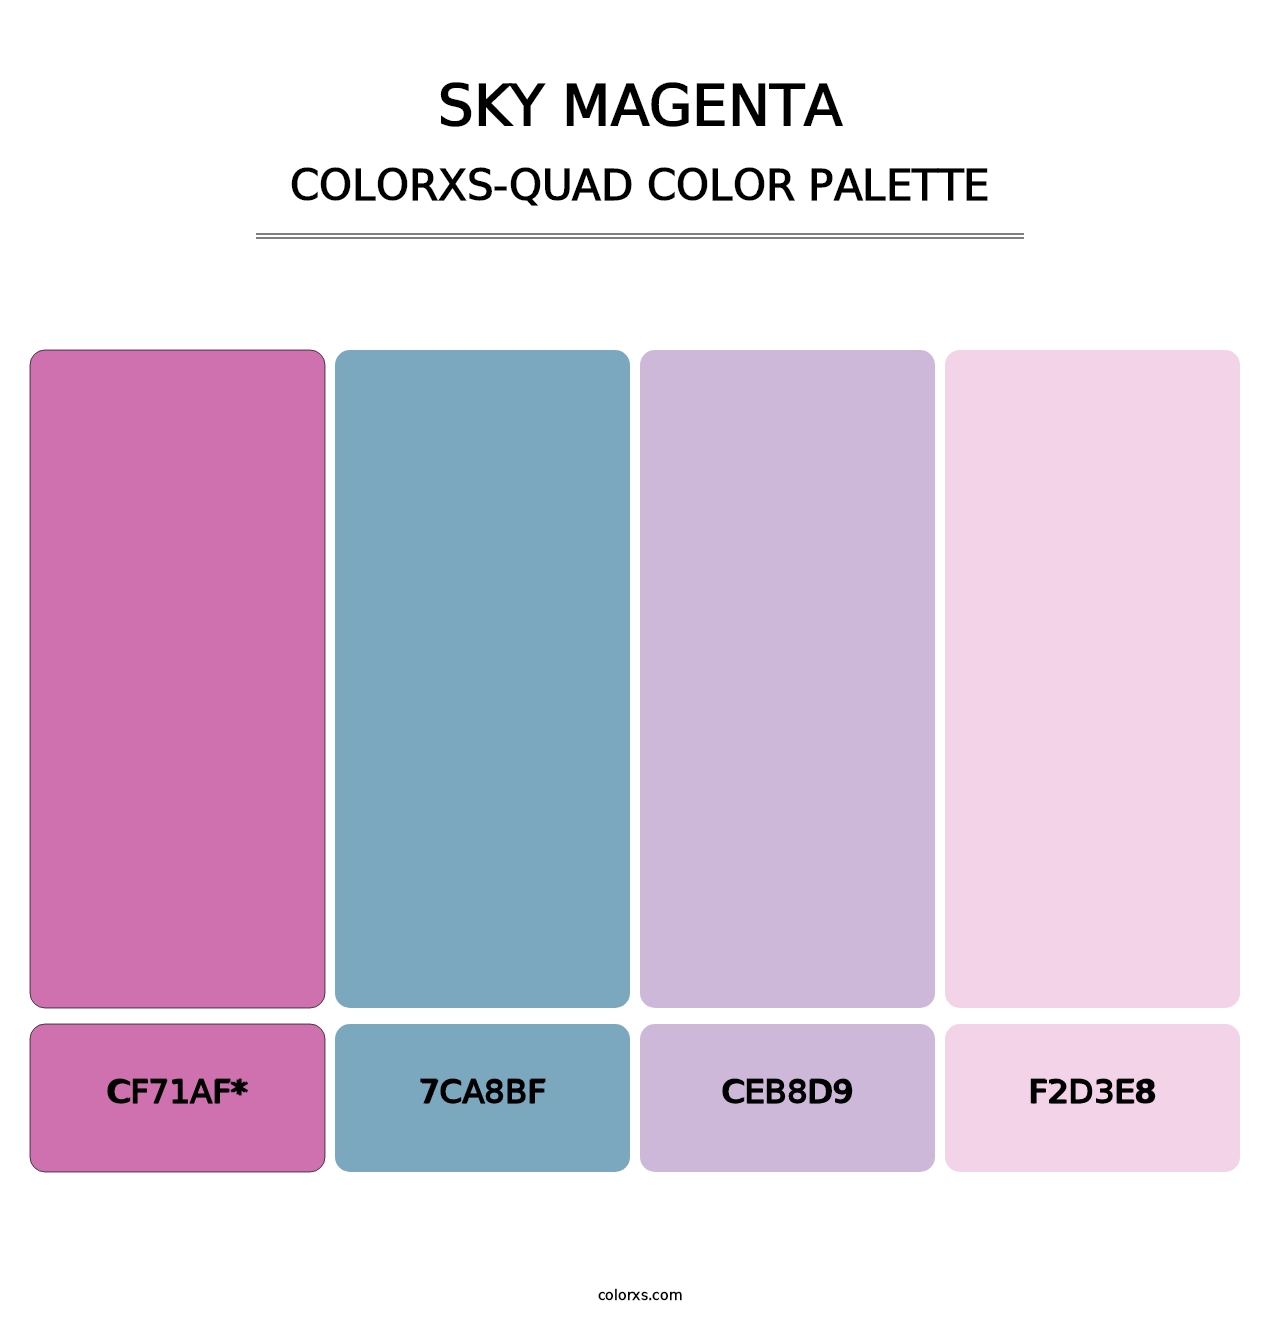 Sky Magenta - Colorxs Quad Palette